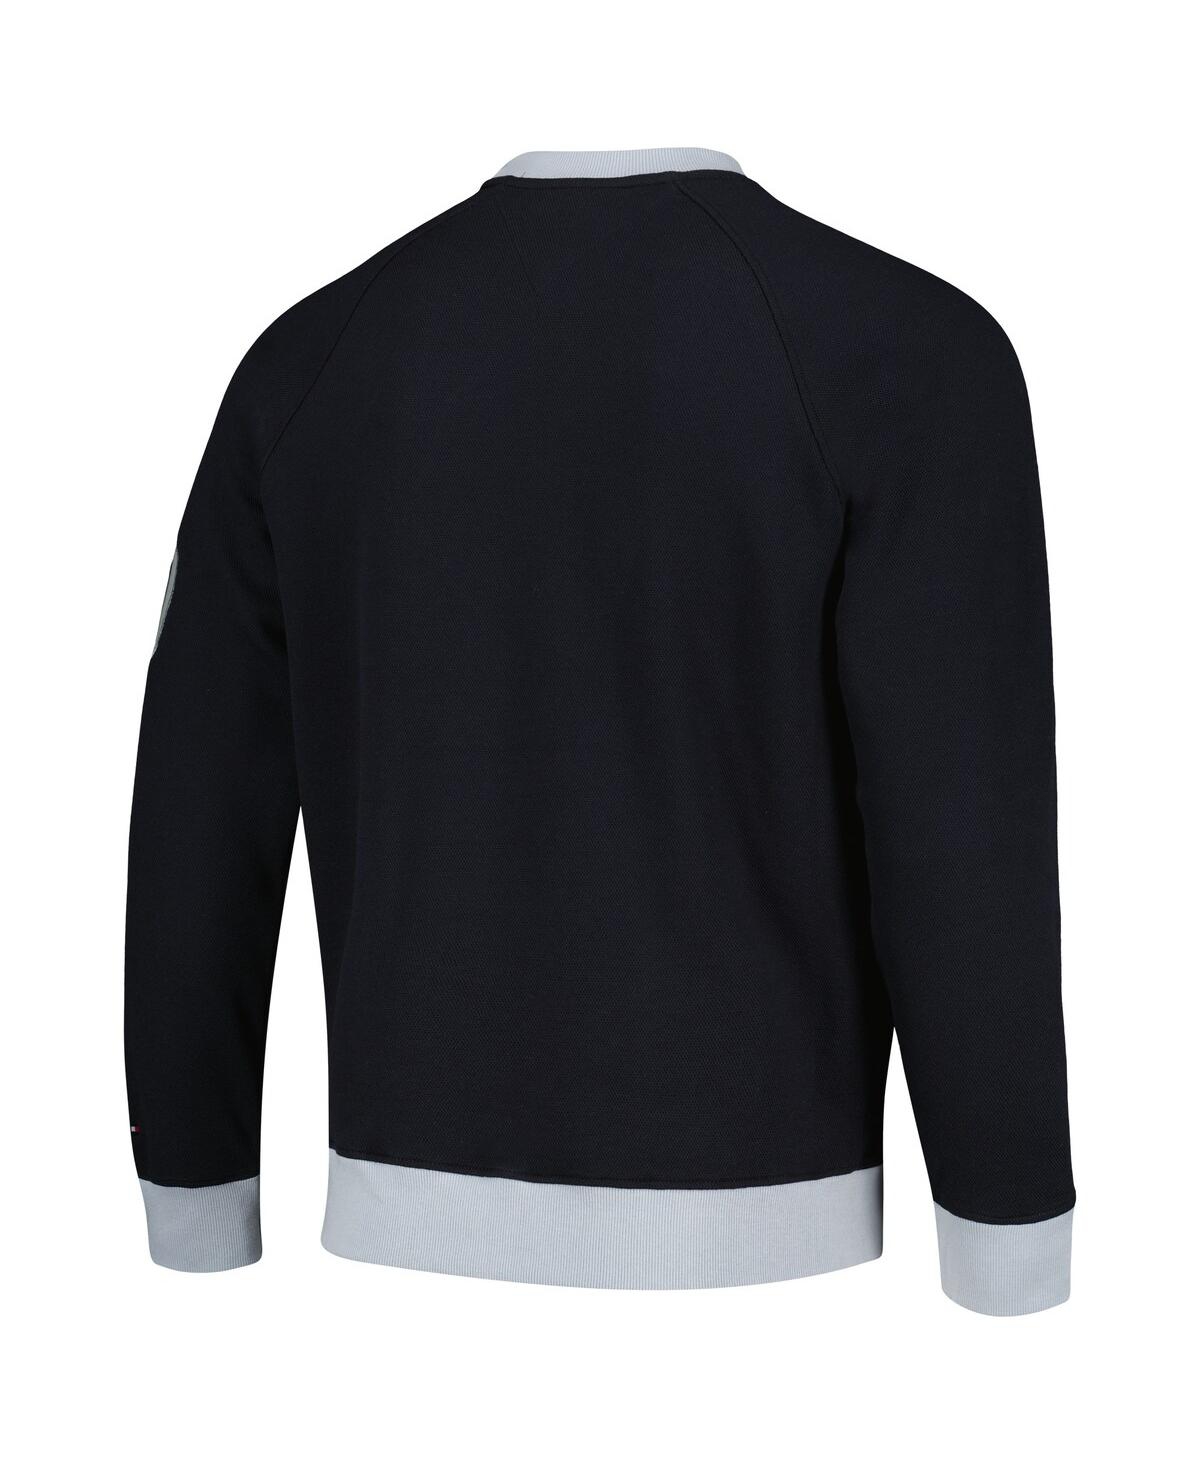 Shop Tommy Hilfiger Men's  Black, Silver Las Vegas Raiders Reese Raglan Tri-blend Pullover Sweatshirt In Black,silver